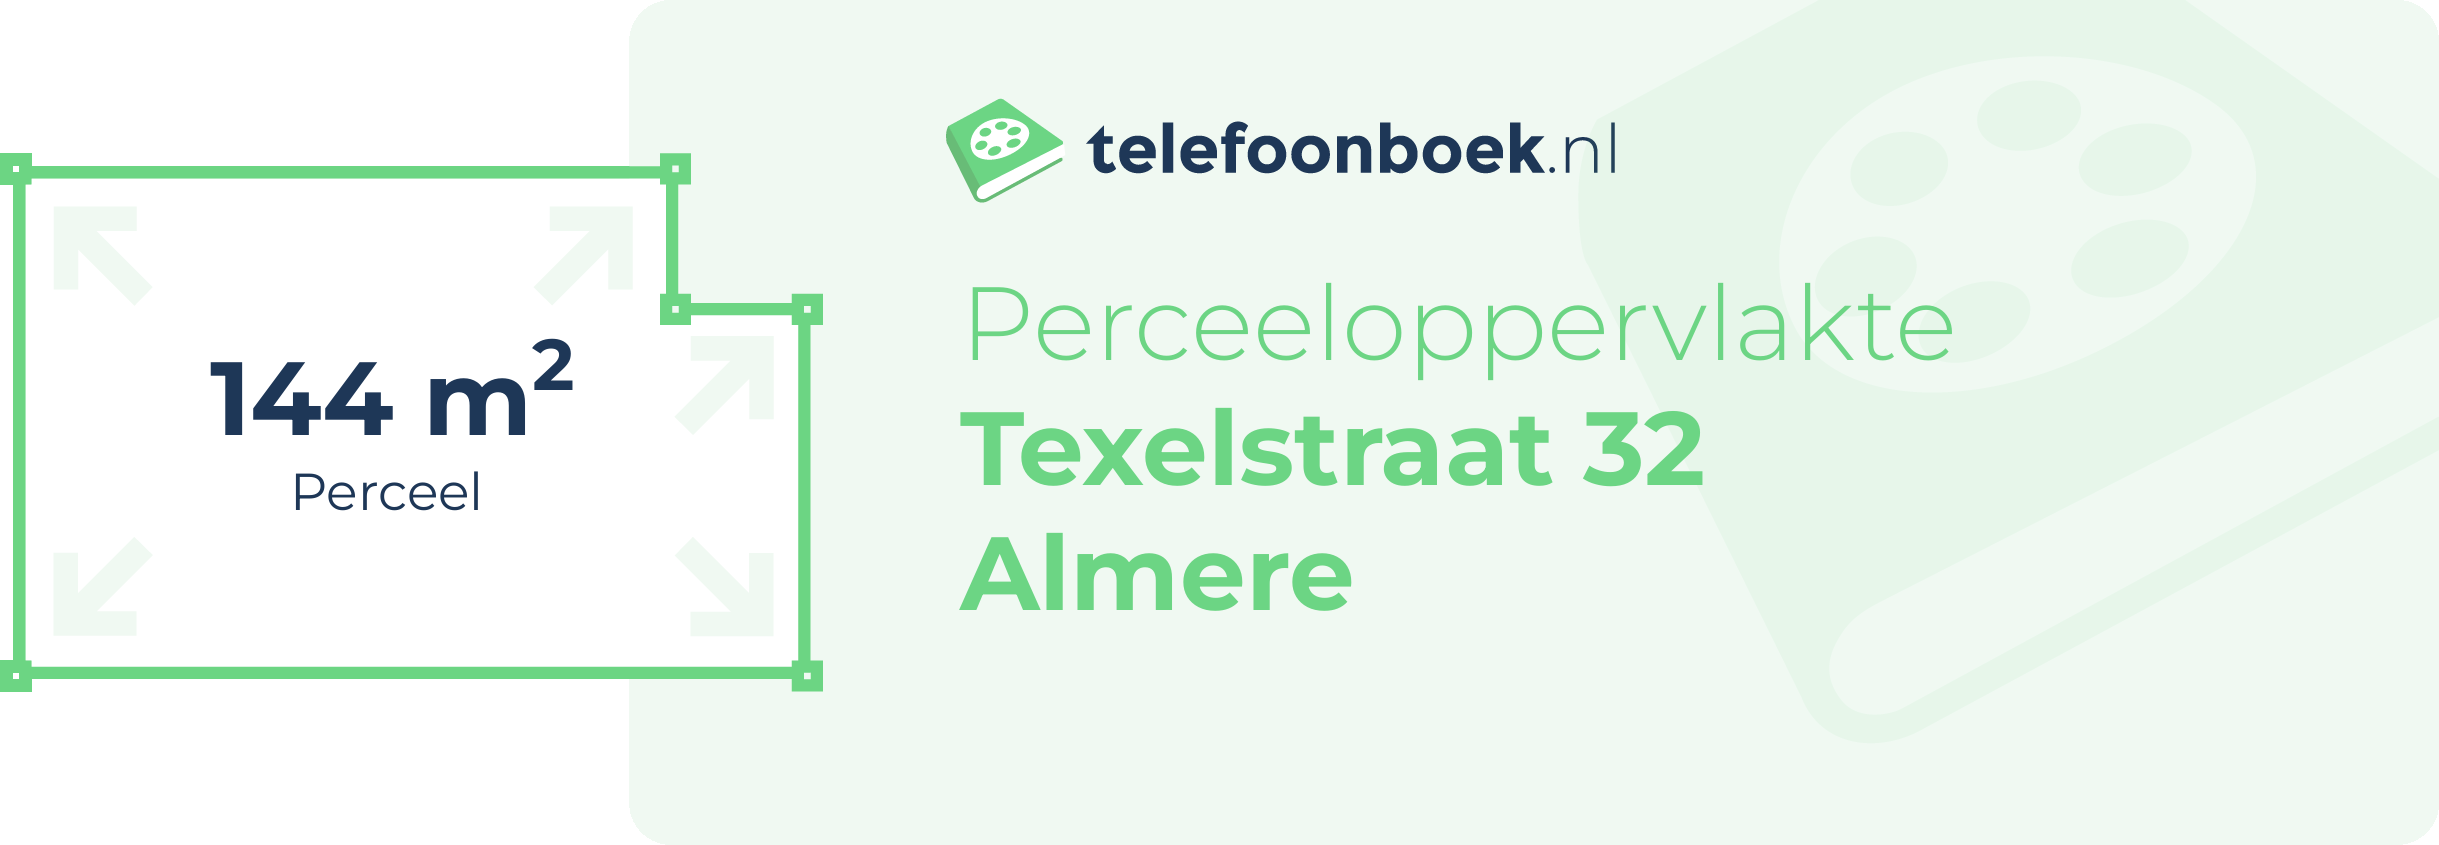 Perceeloppervlakte Texelstraat 32 Almere